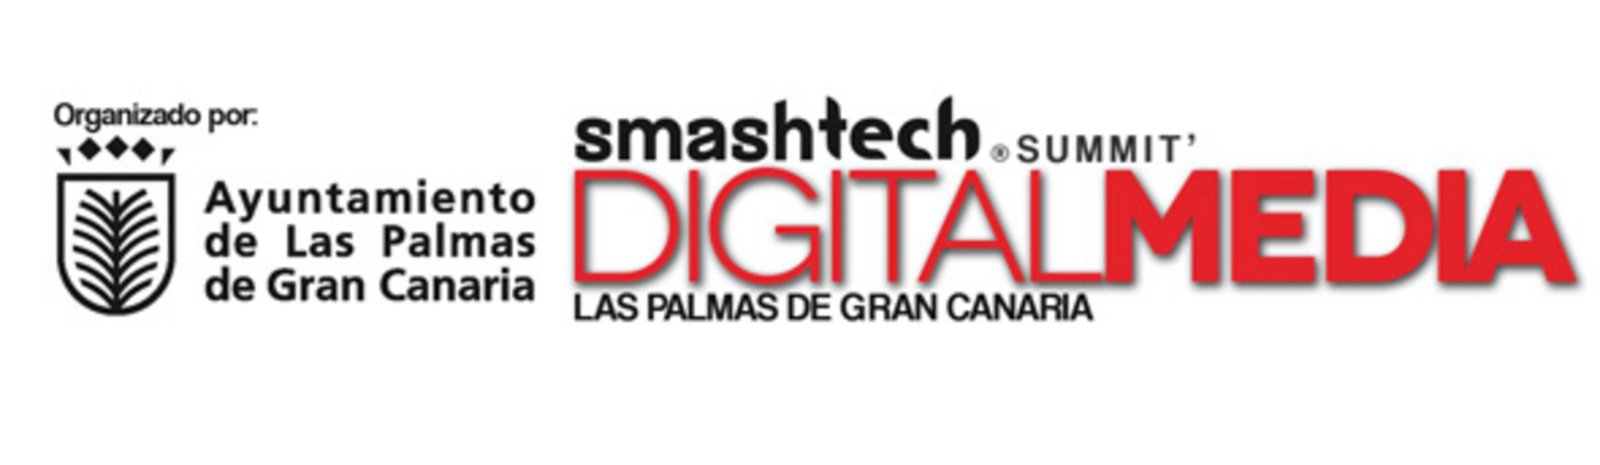 smash-tech-digital-media-6